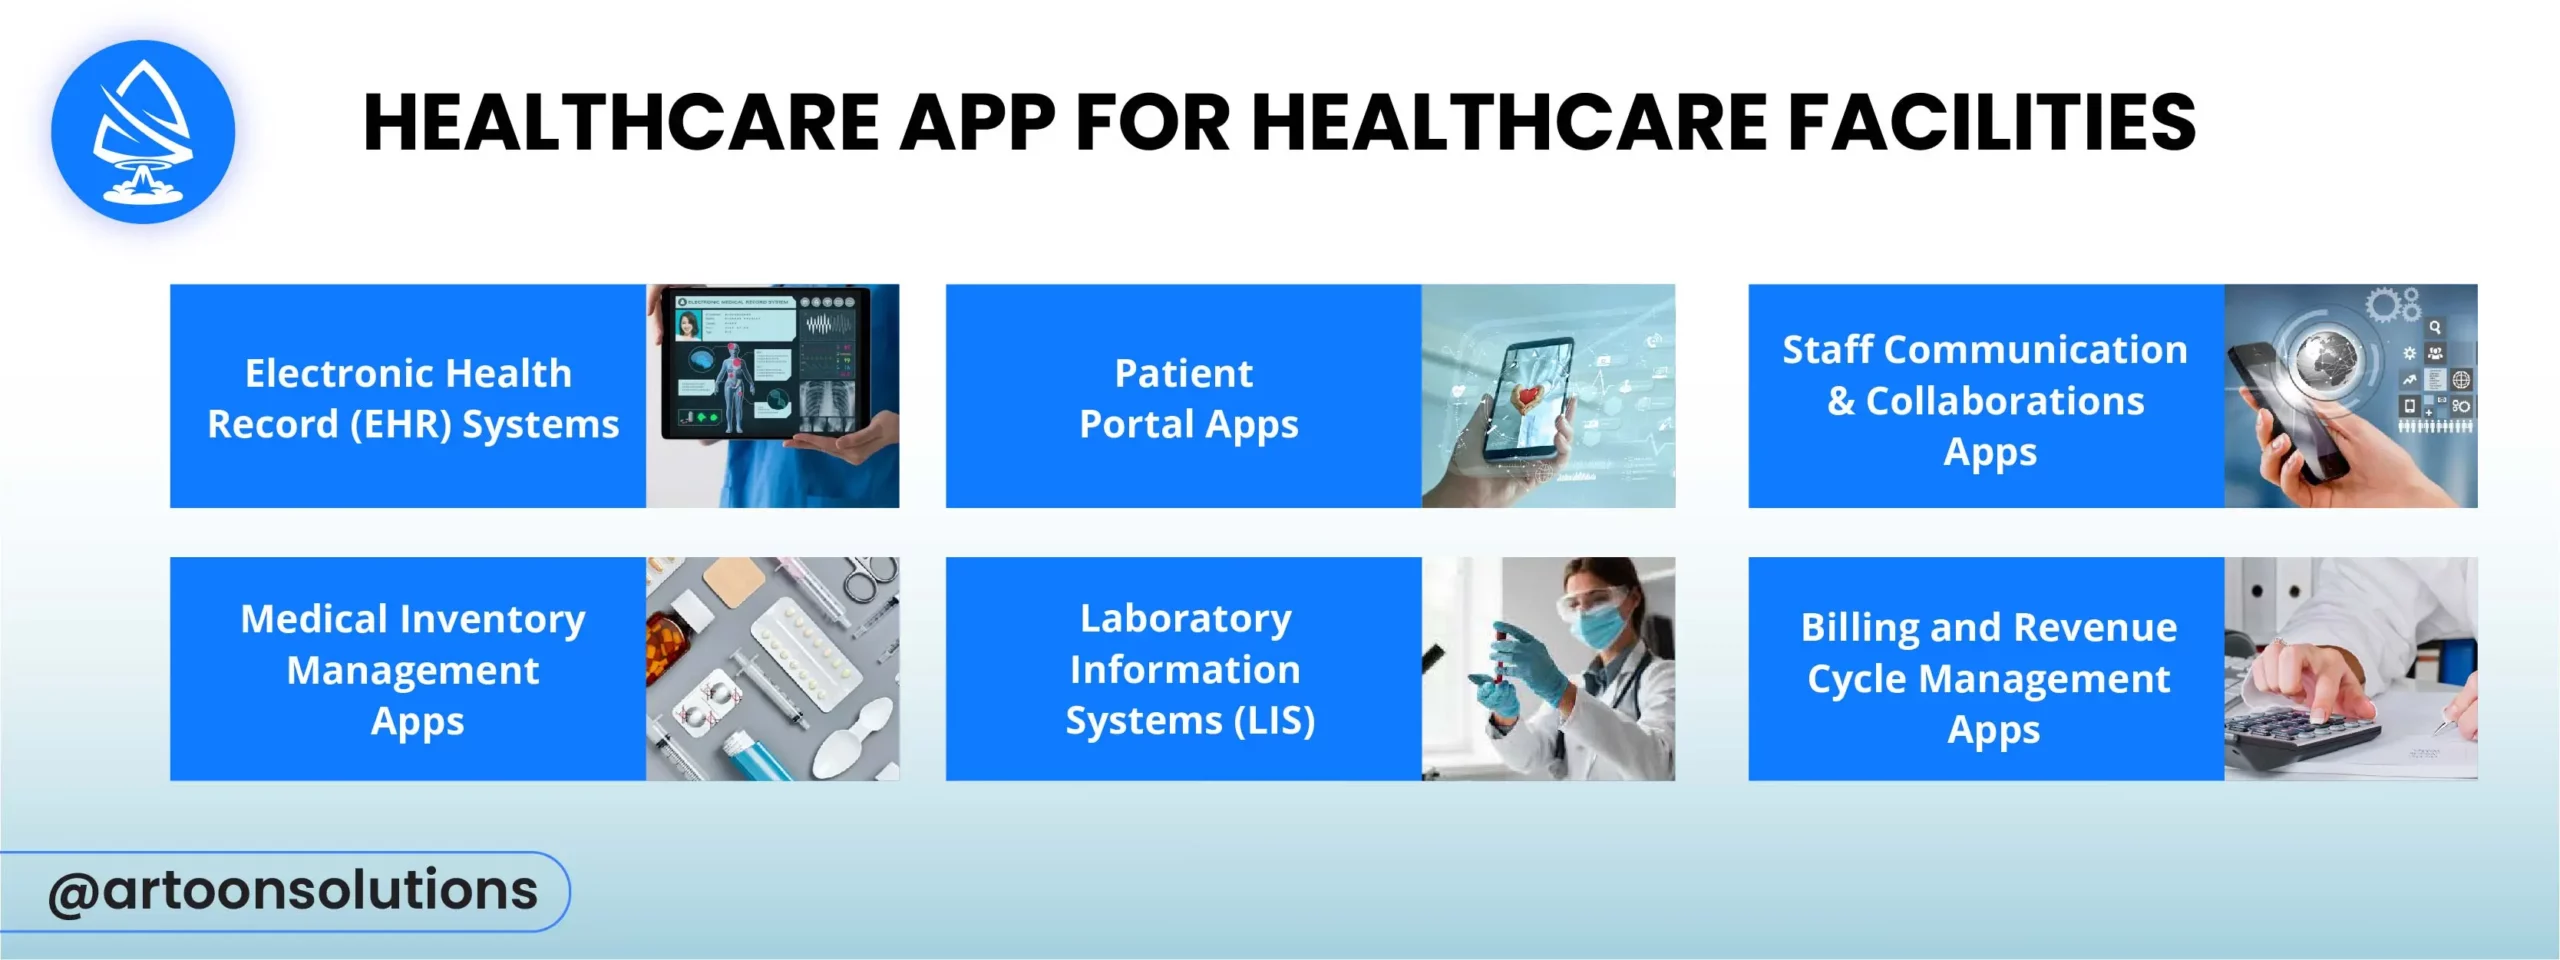 Healthcare App for Healthcare Facilities